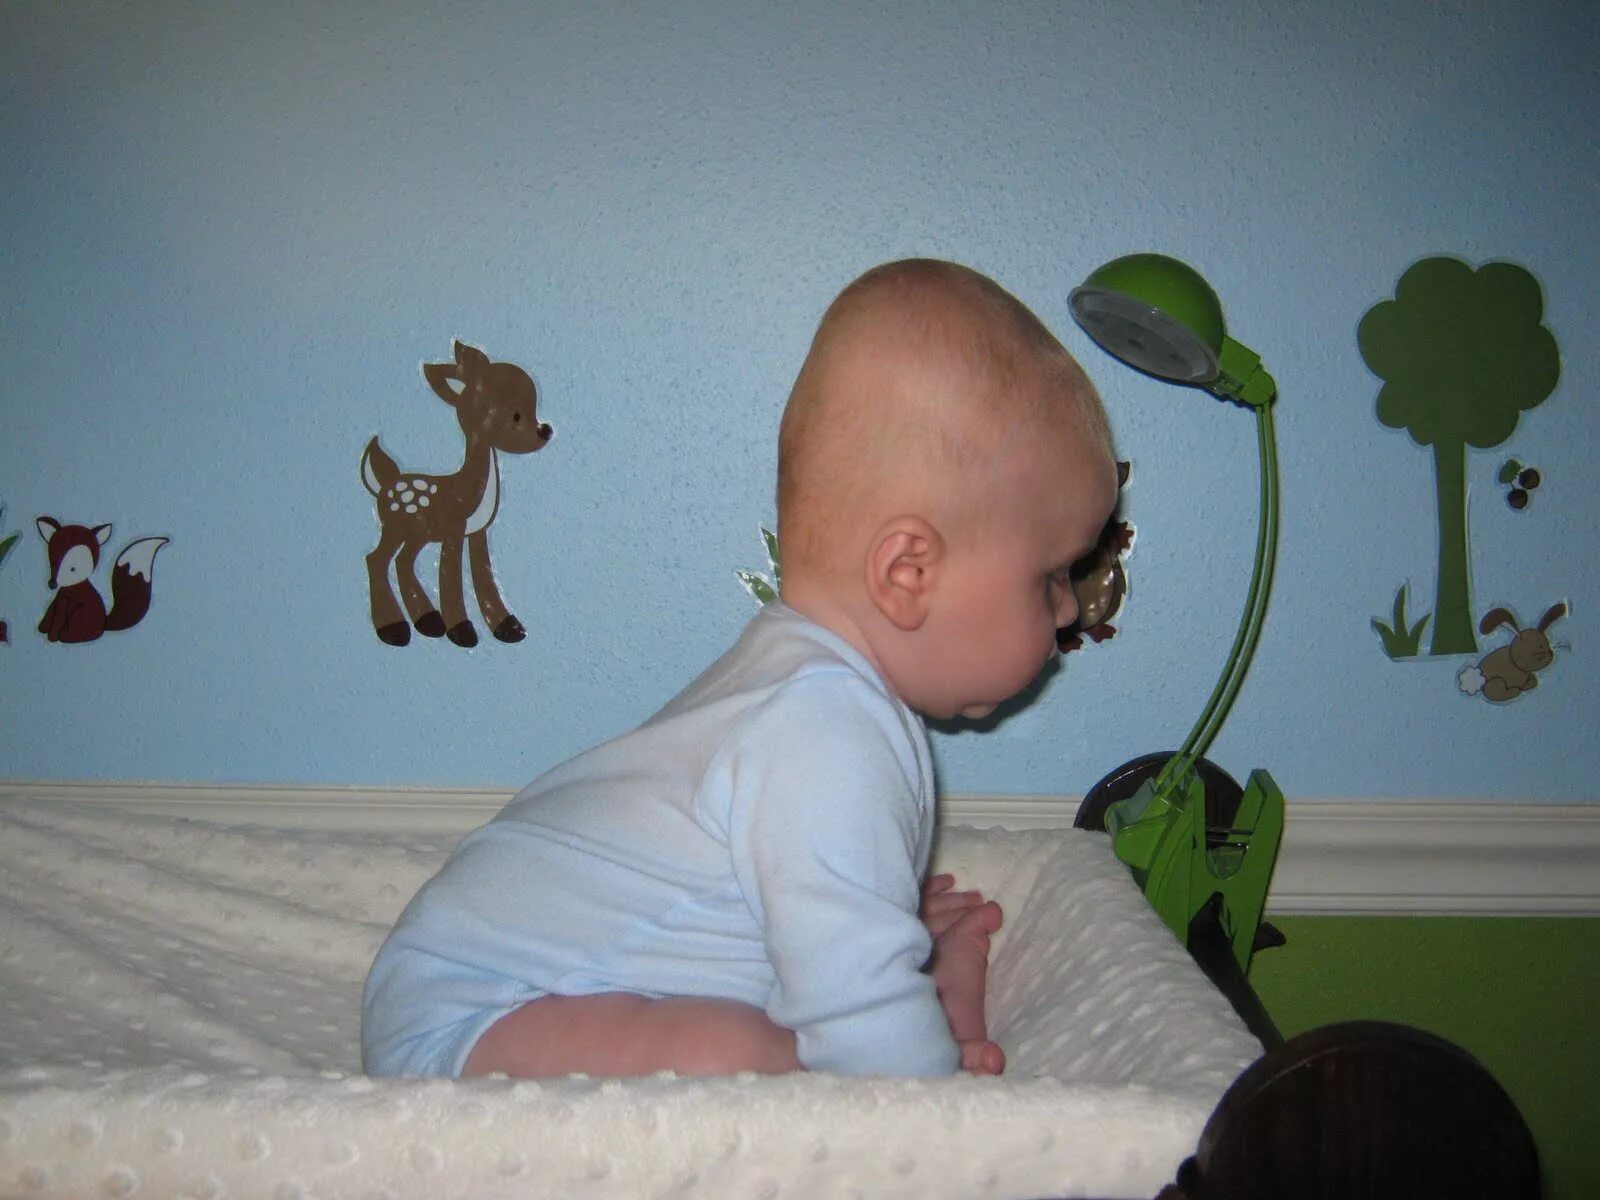 Долихоцефалическая, долихоцефалическая форма головы. Долихоцефалическая форма головы у младенца. : Плагиоцефалия, брахицефалия, долихоцефалия. Вытянутый затылок у ребенка.